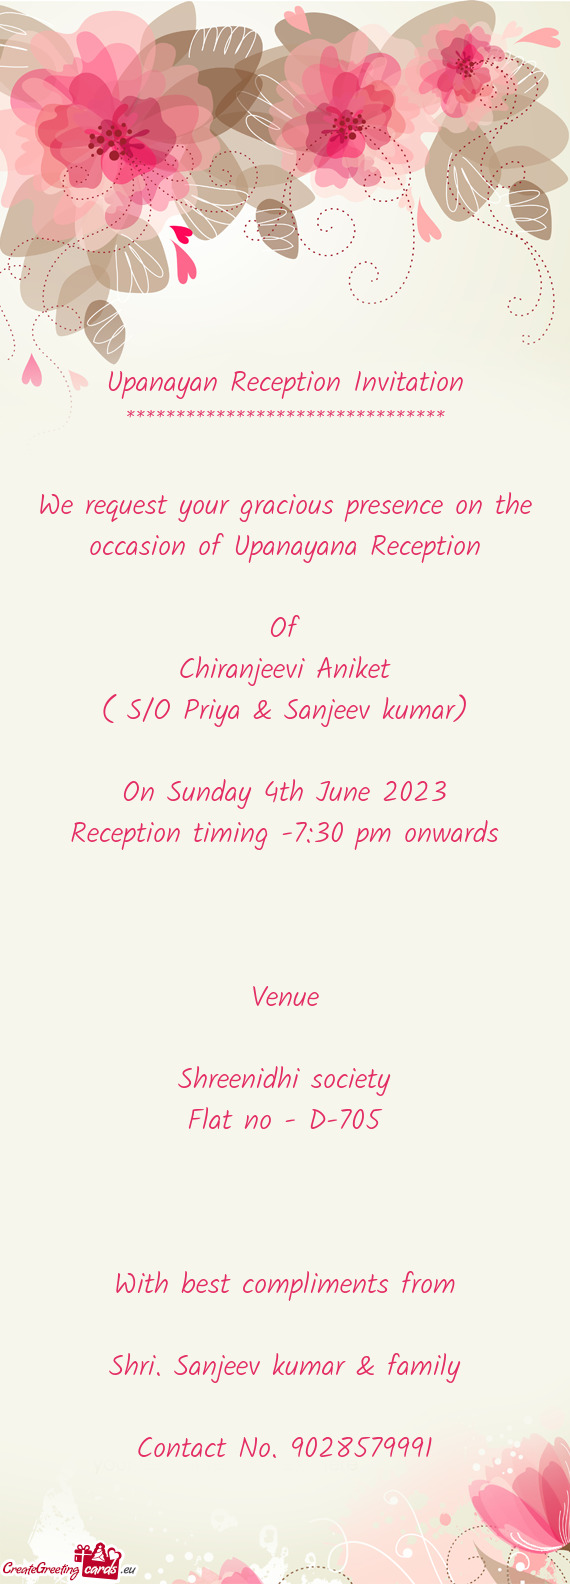 Upanayan Reception Invitation